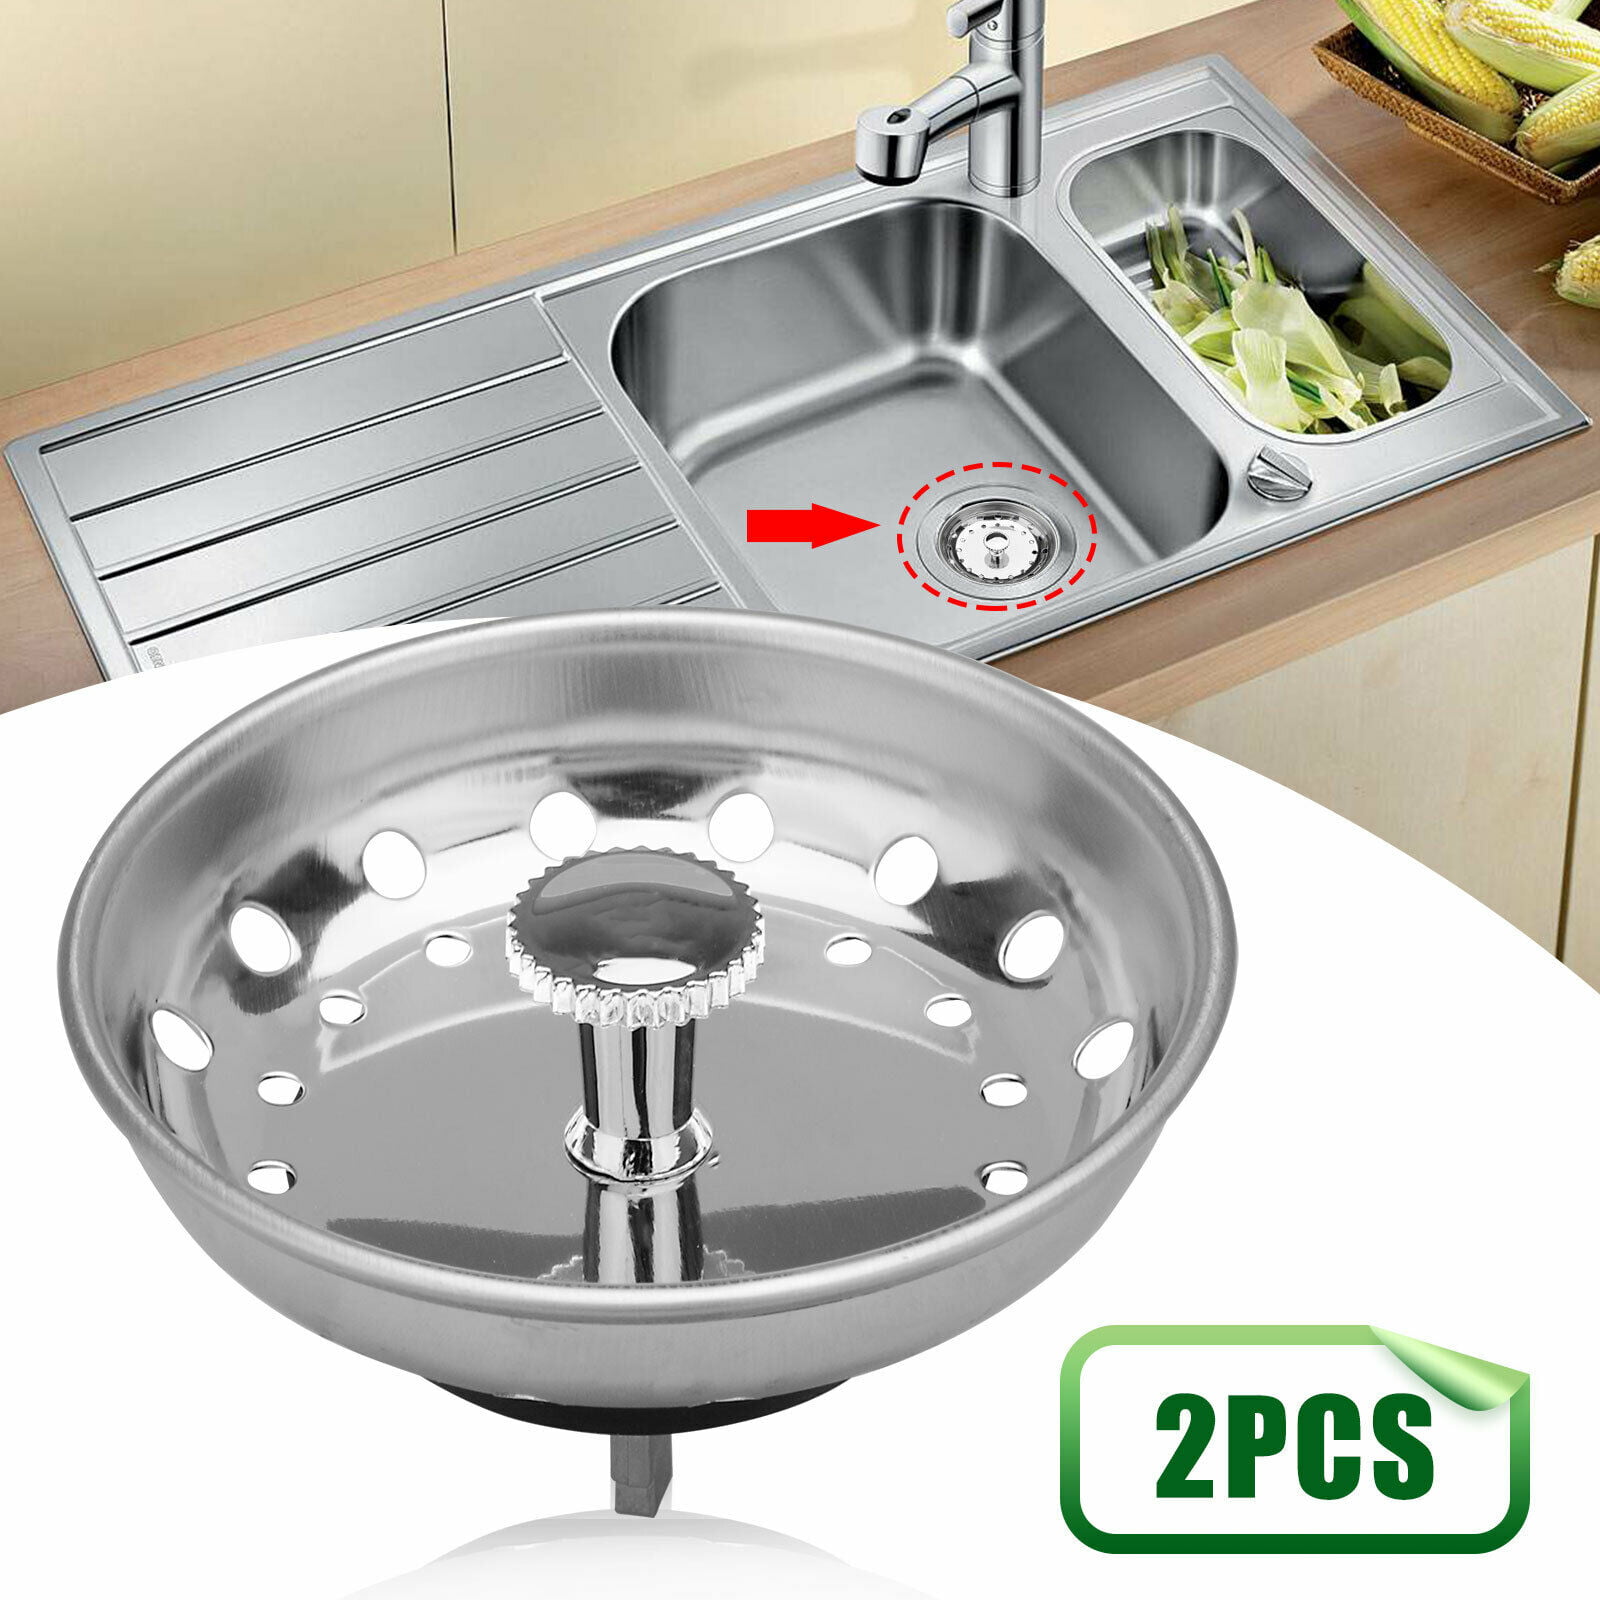 2x Household Stainless Steel Sink Drain Stopper Filter Basket Waste Plug